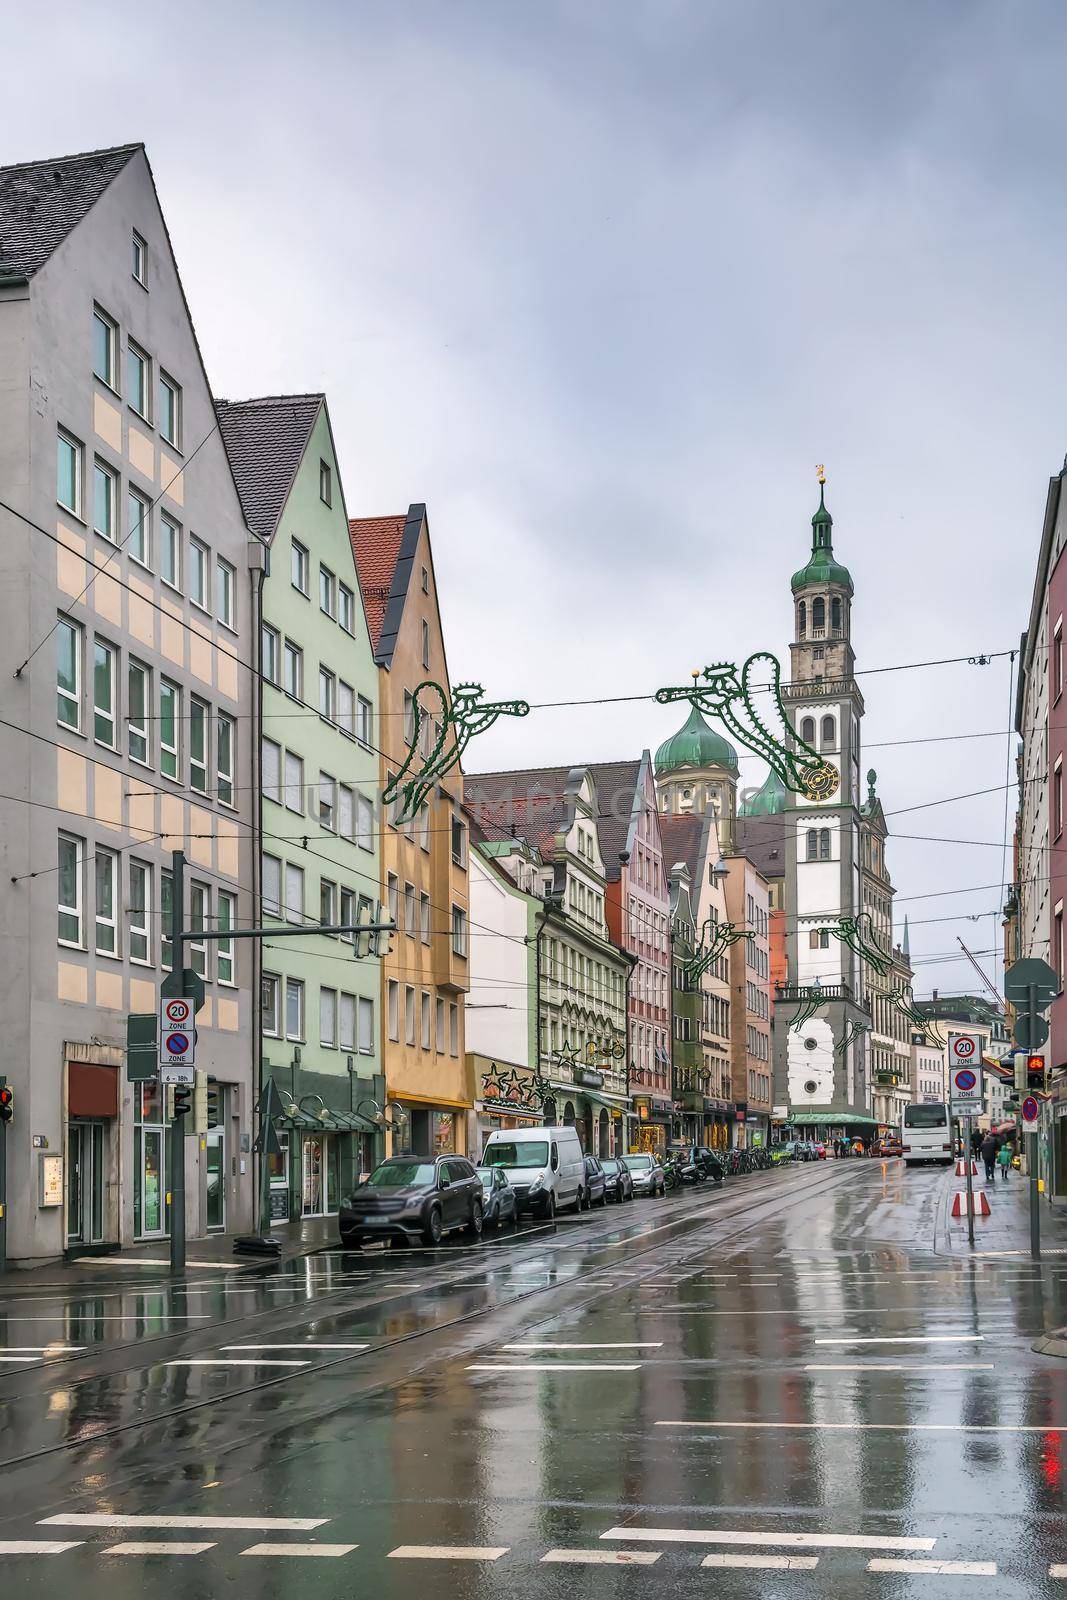 Street in Augsburg, Germany by borisb17